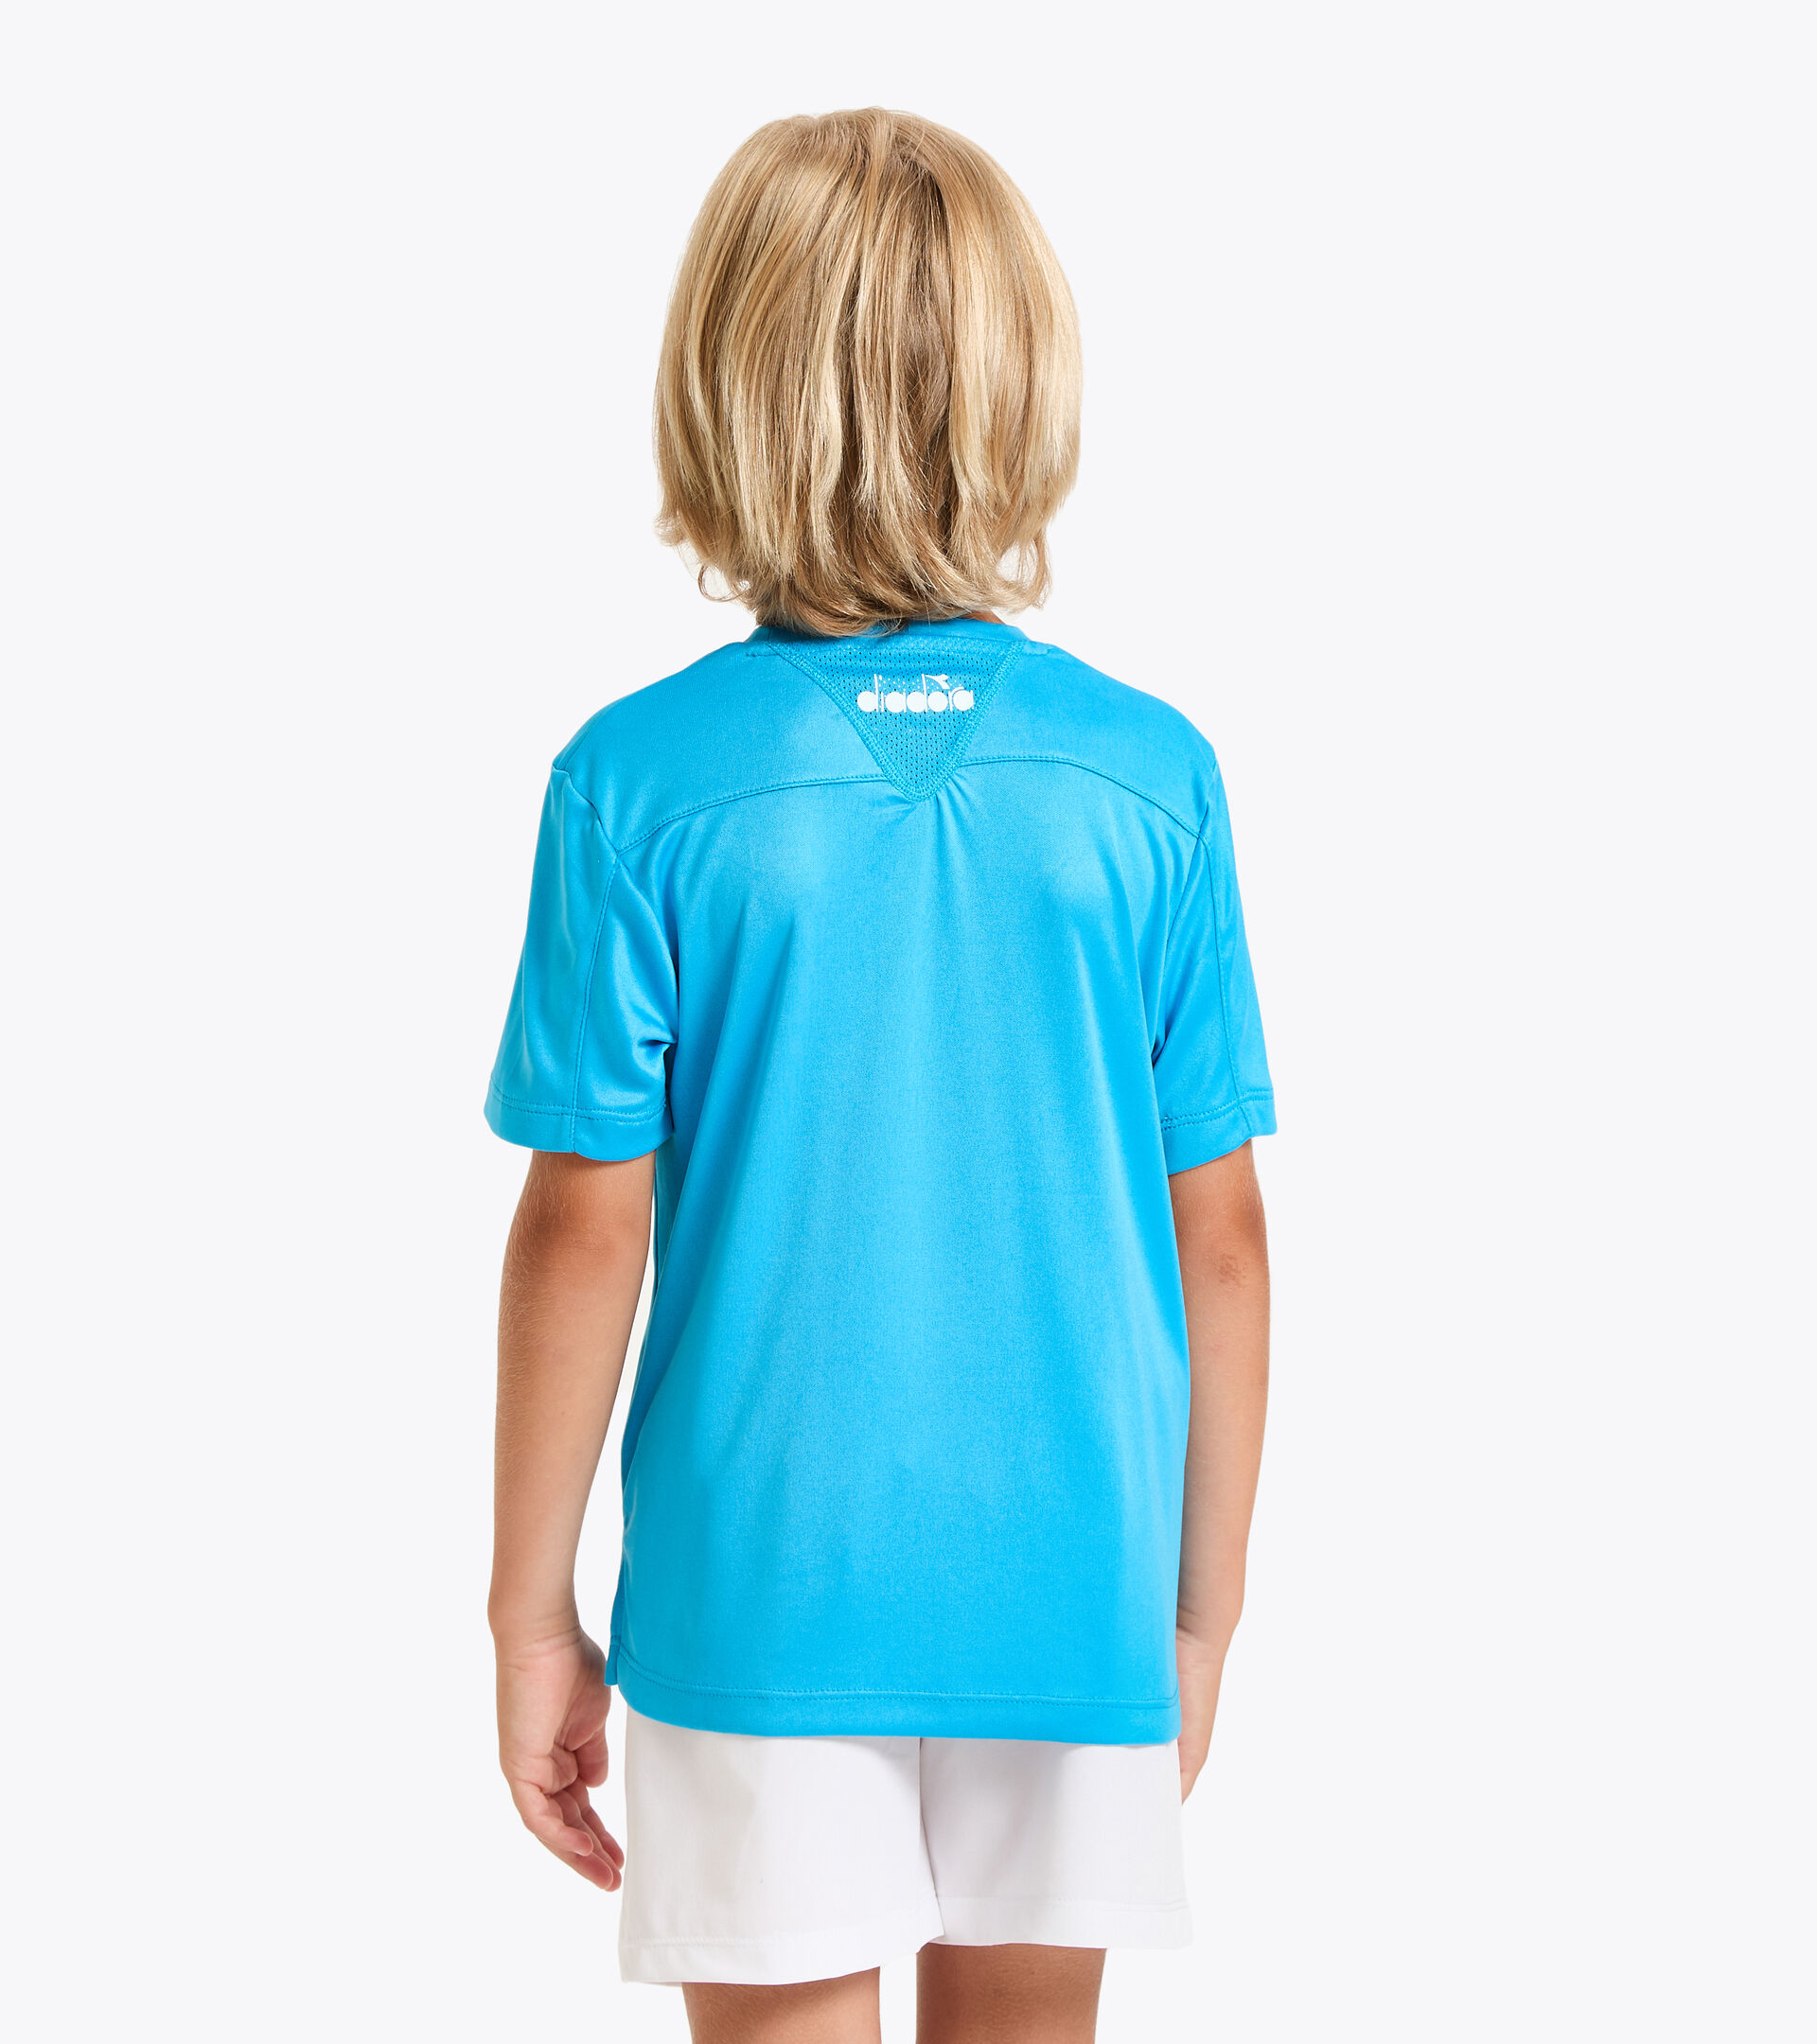 Tennis T-shirt - Junior J. T-SHIRT TEAM ROYAL FLUO - Diadora